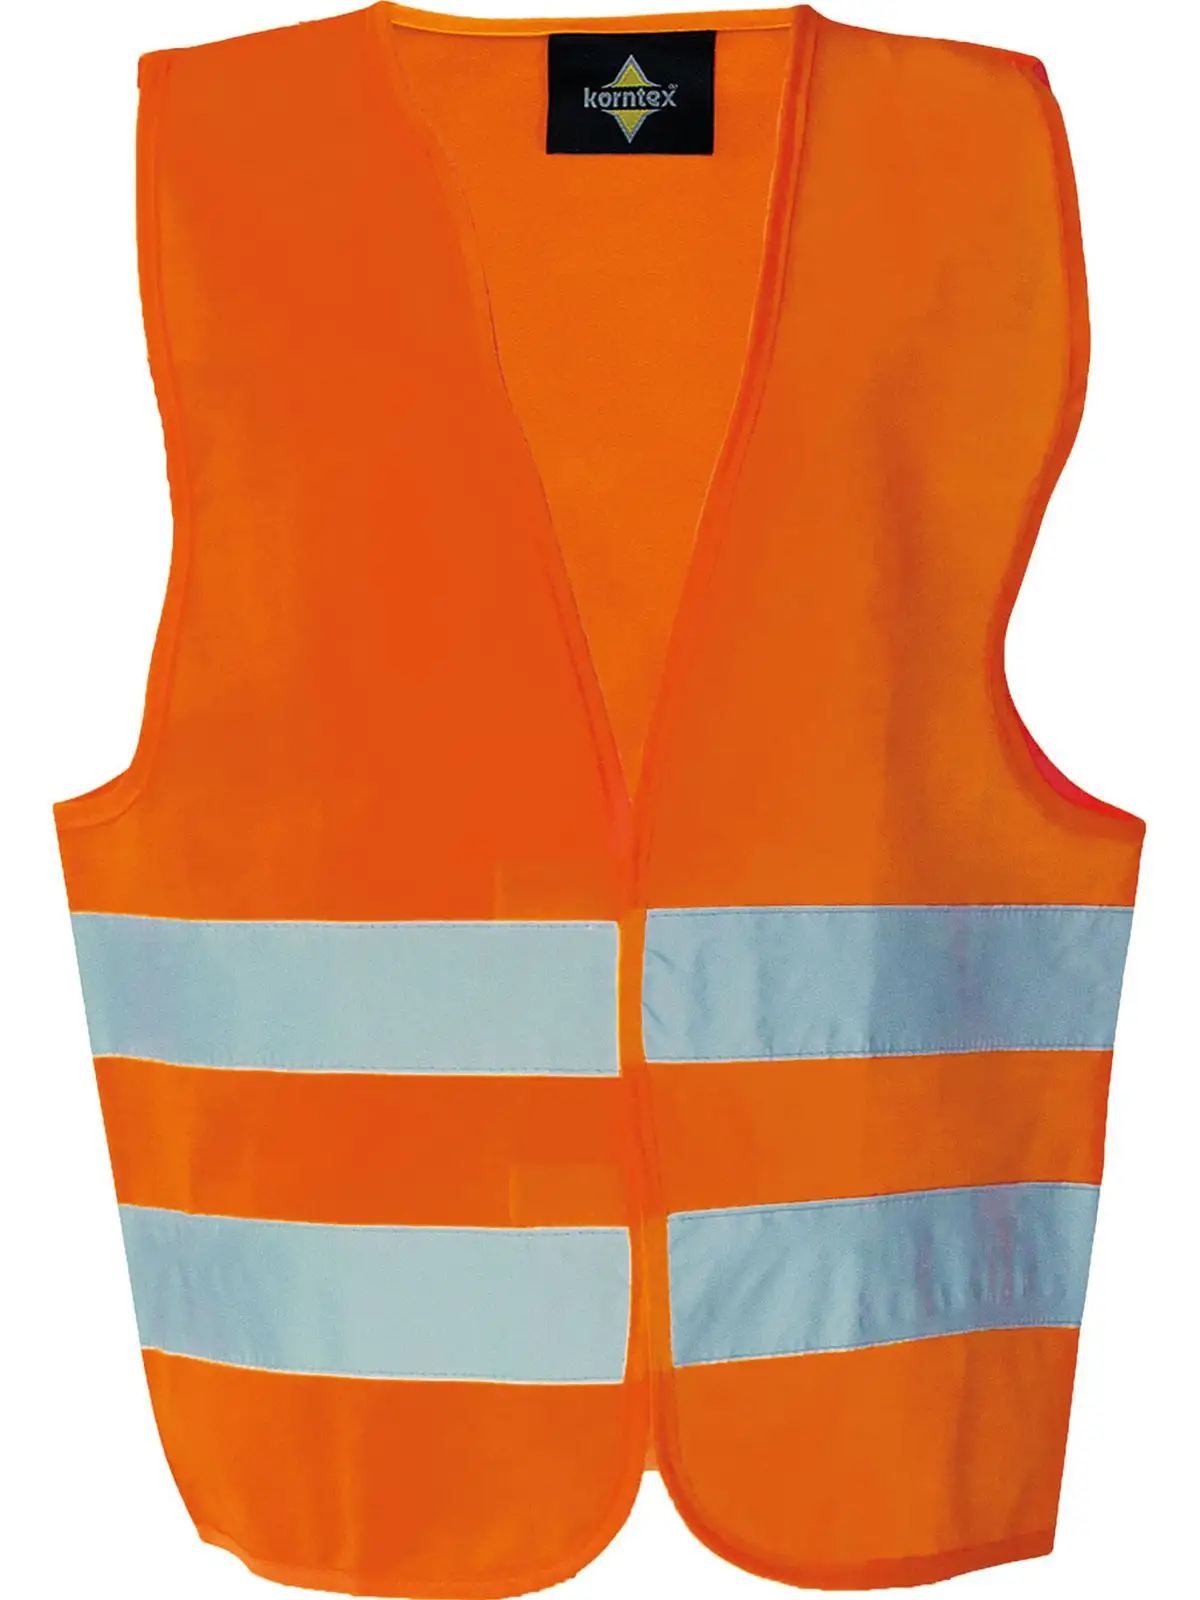 Giacca Safety Vest For Kids